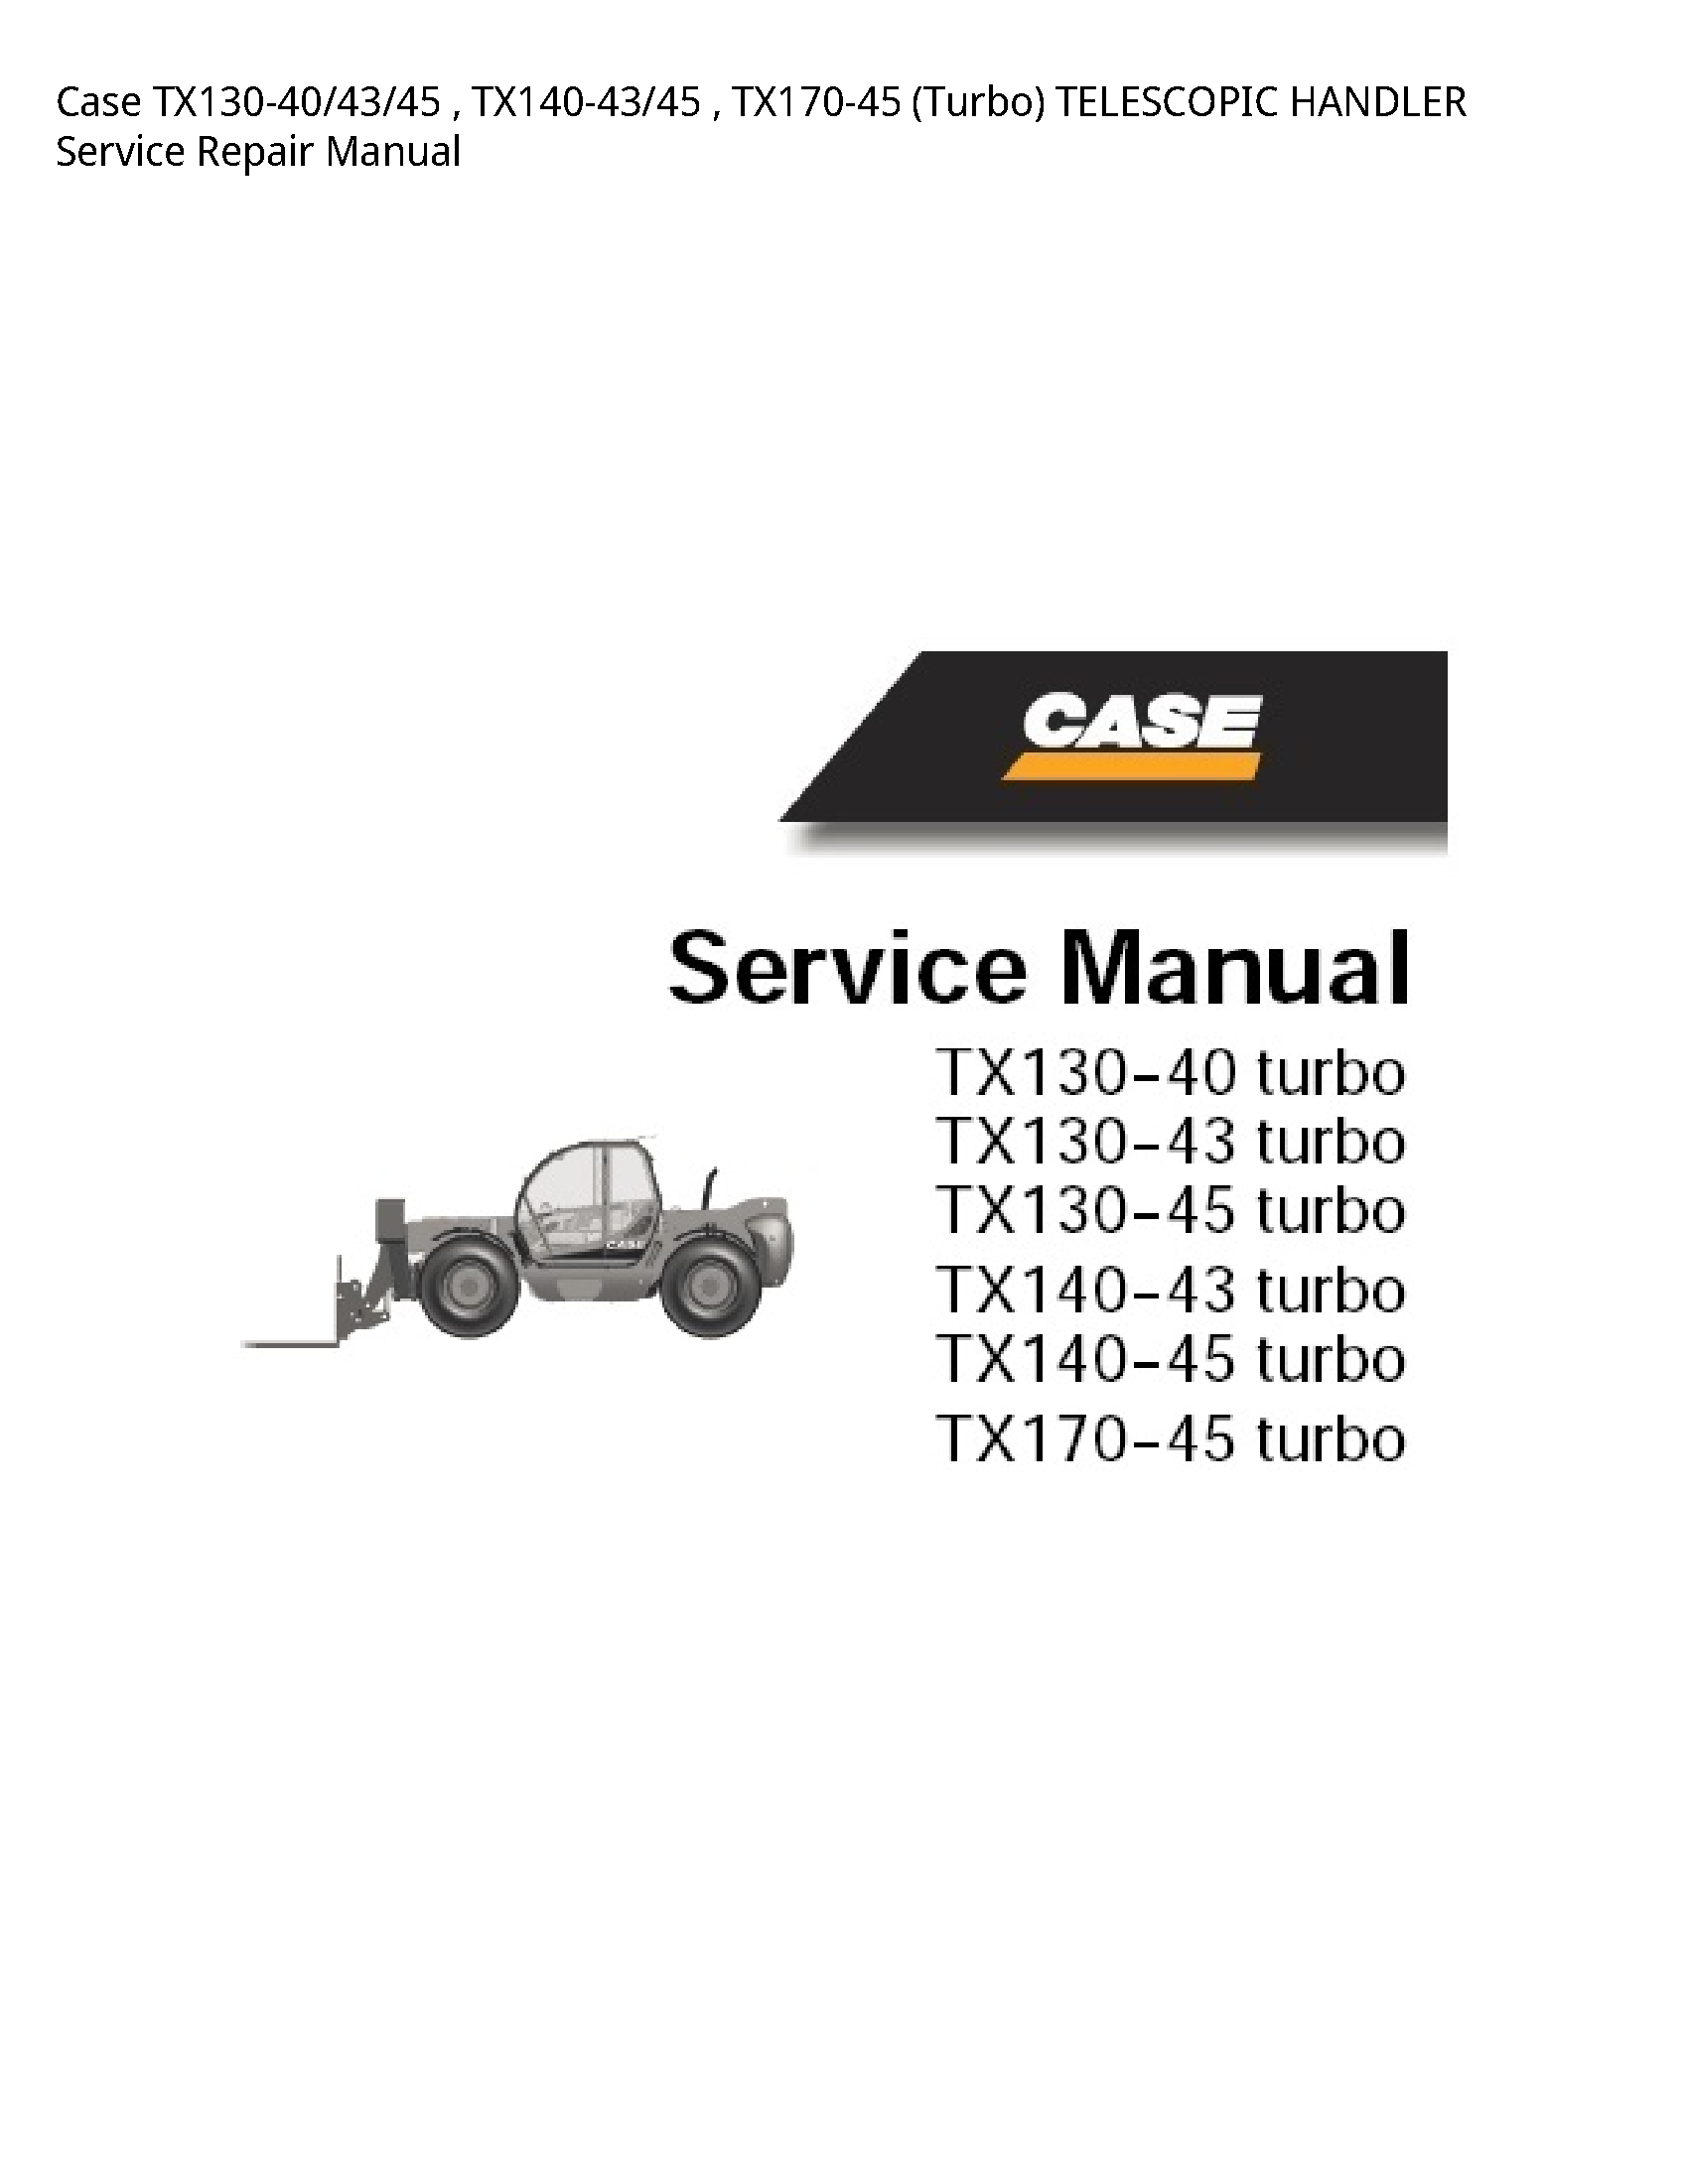 Case/Case IH TX130-40 (Turbo) TELESCOPIC HANDLER manual